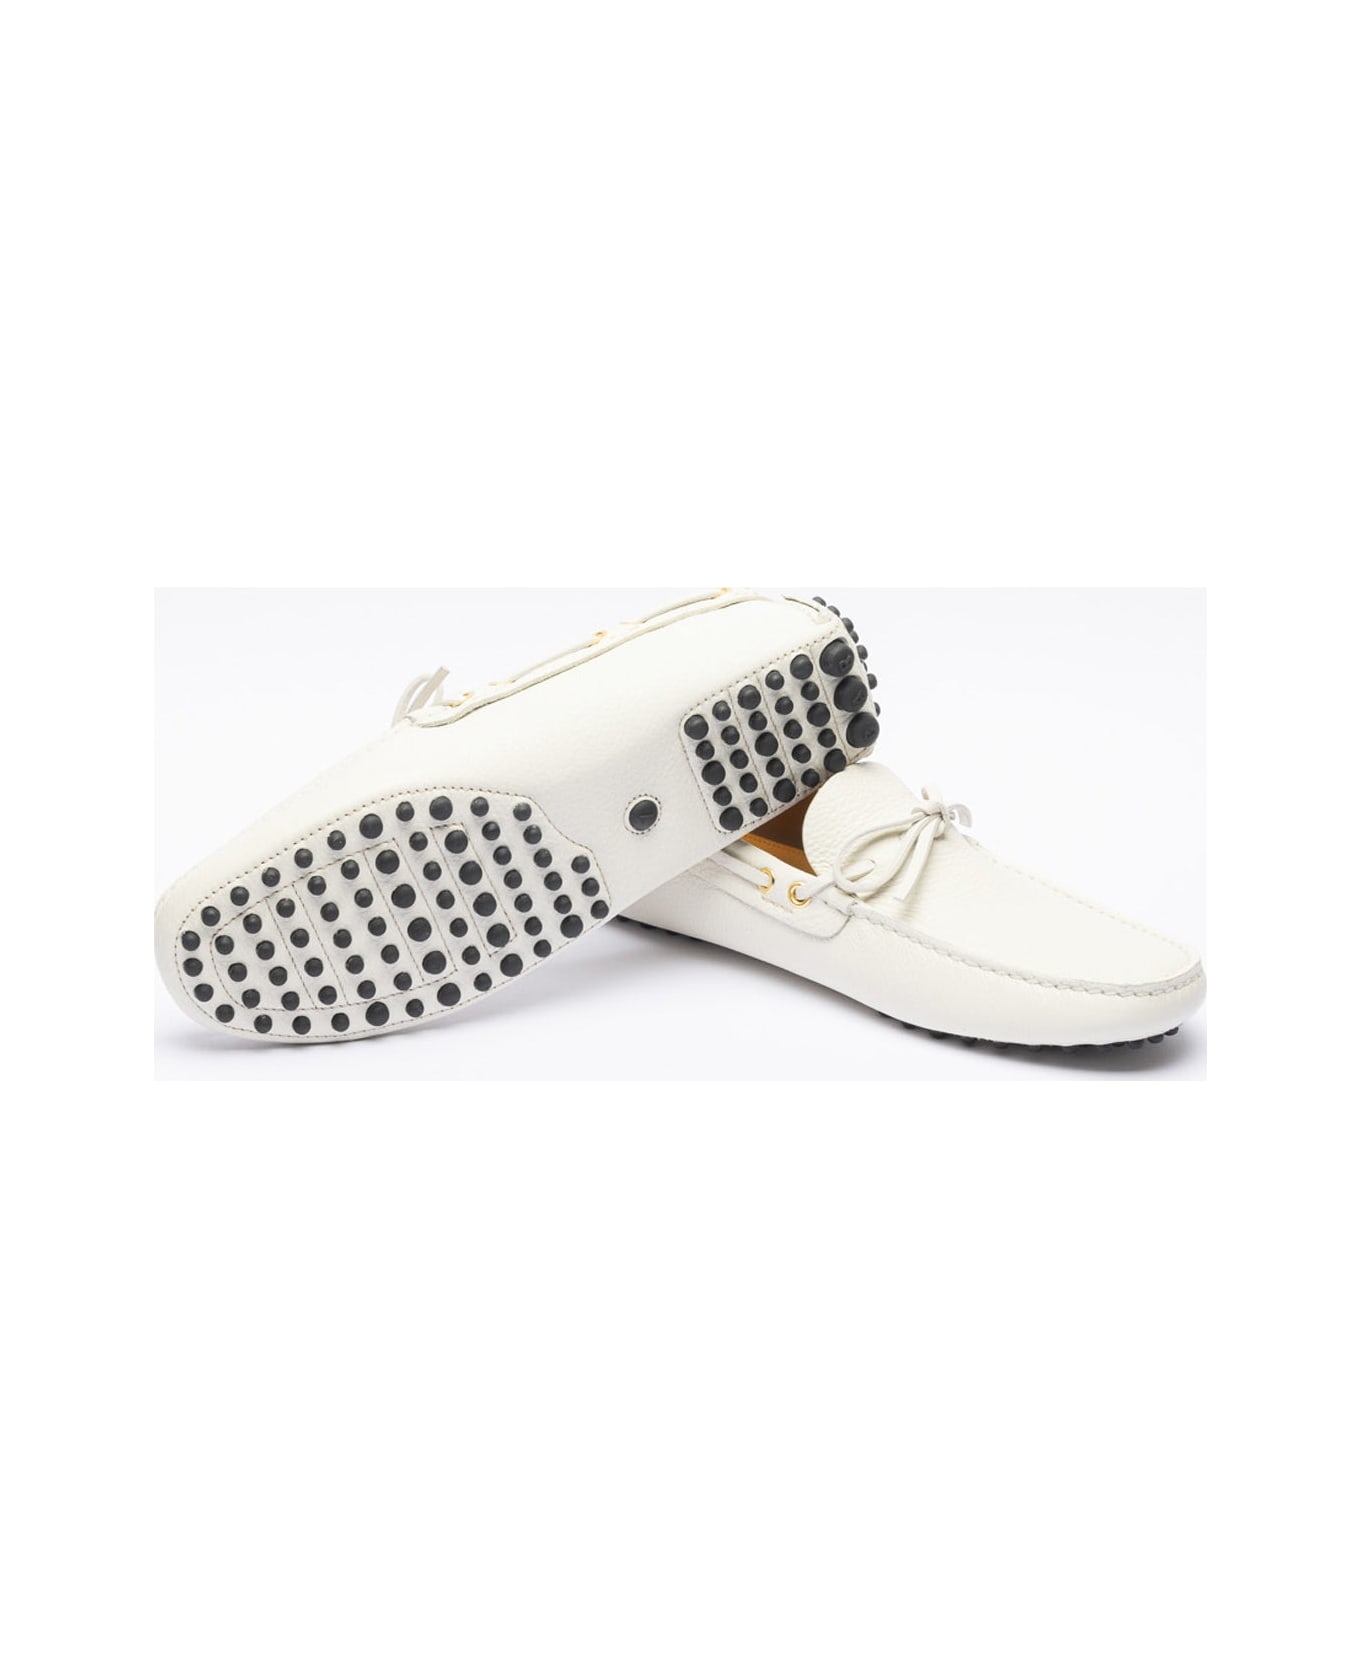 Car Shoe White Grain Calf Driving Loafer - Bianco